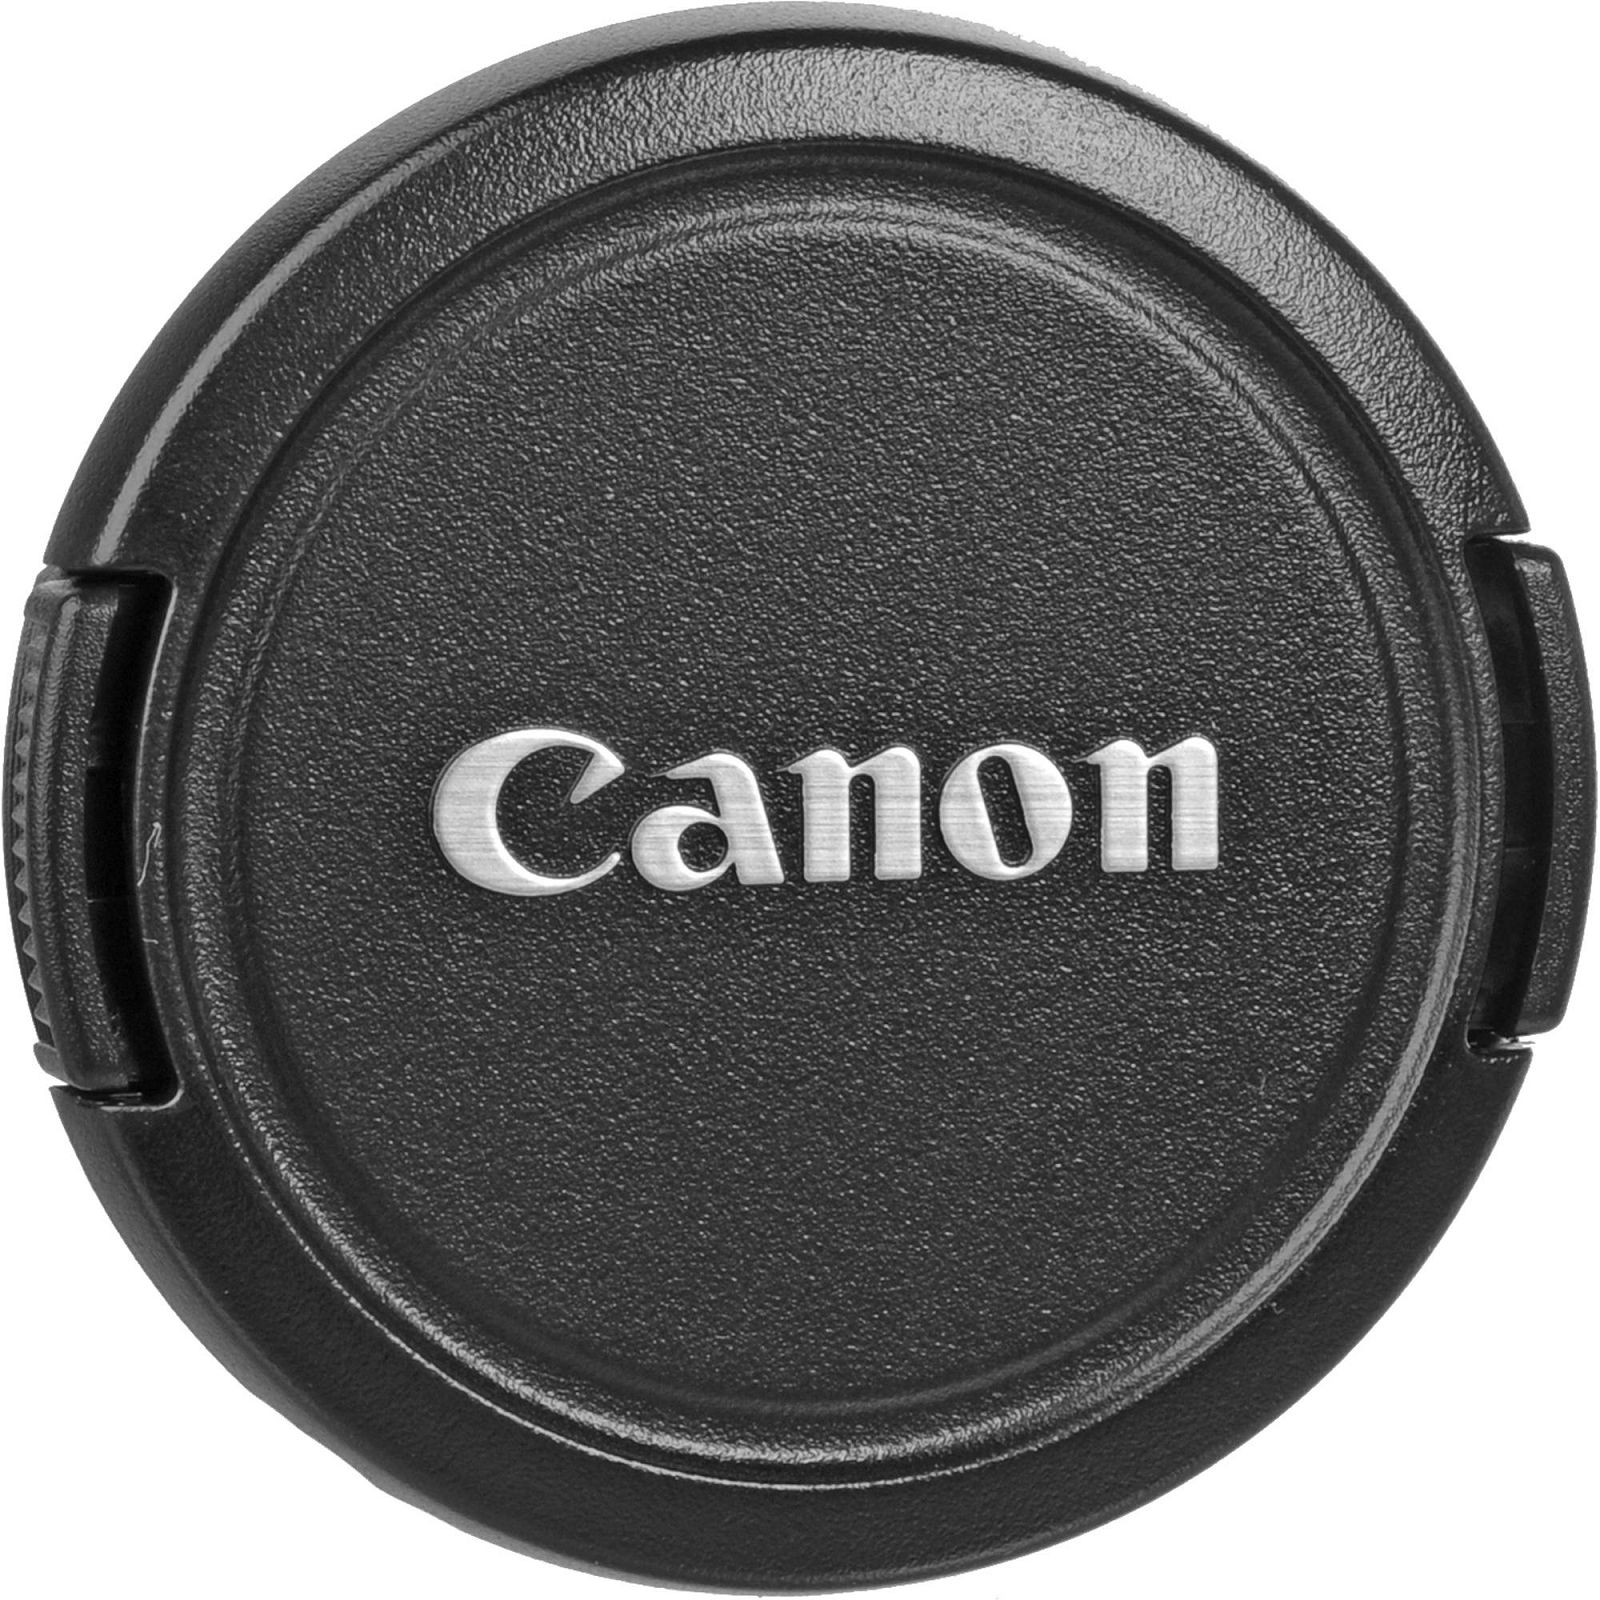 Canon EF 75-300mm f/4-5.6 III telefoto objektiv zoom lens 75-300 F/4.0-5.6 1:4,0-5,6 (6473A015AA)